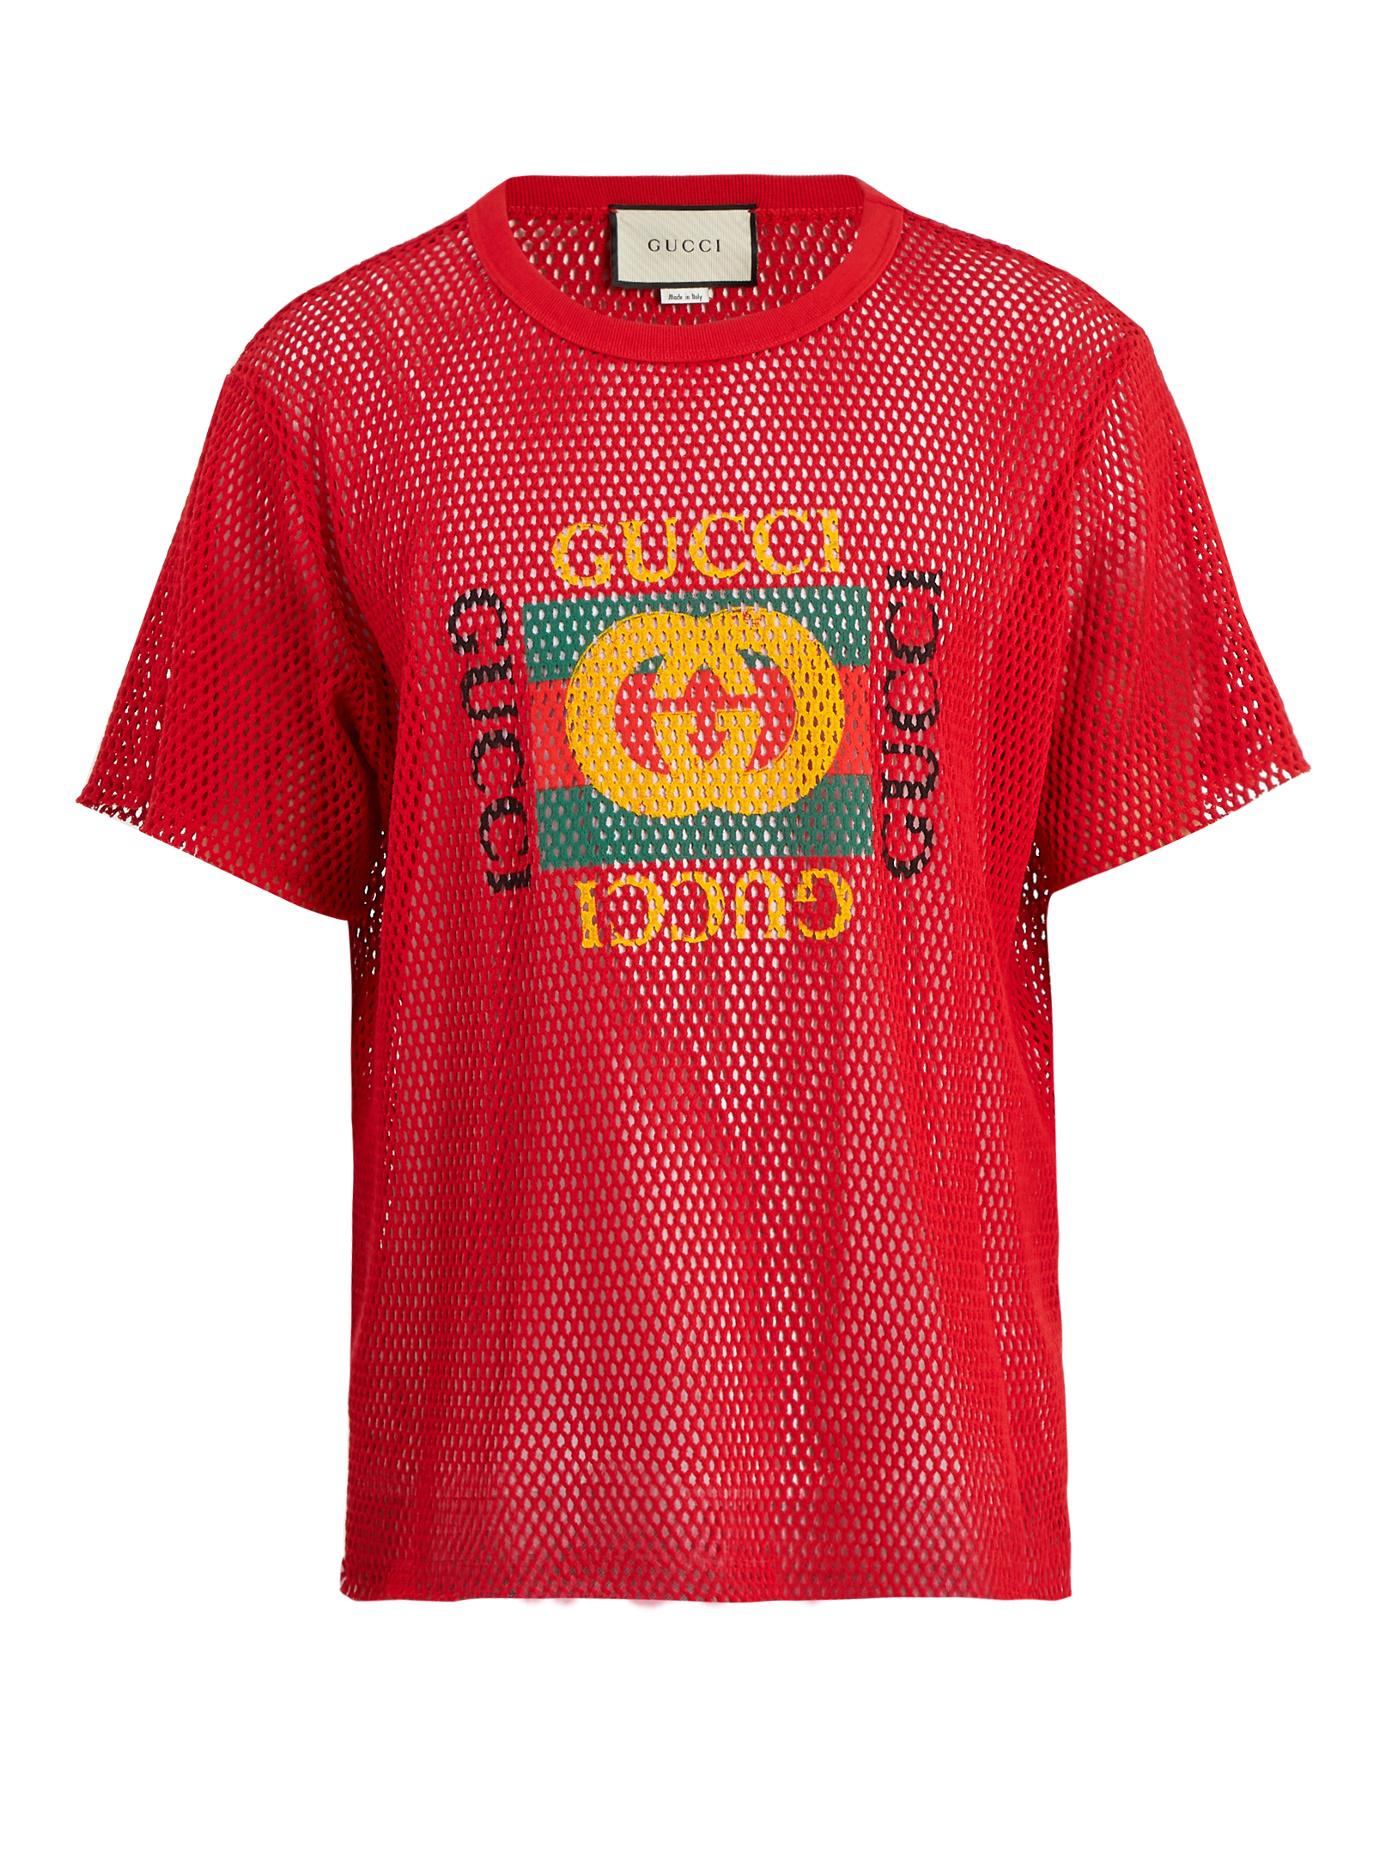 Gucci red logo mesh shirt Small iuu.org.tr